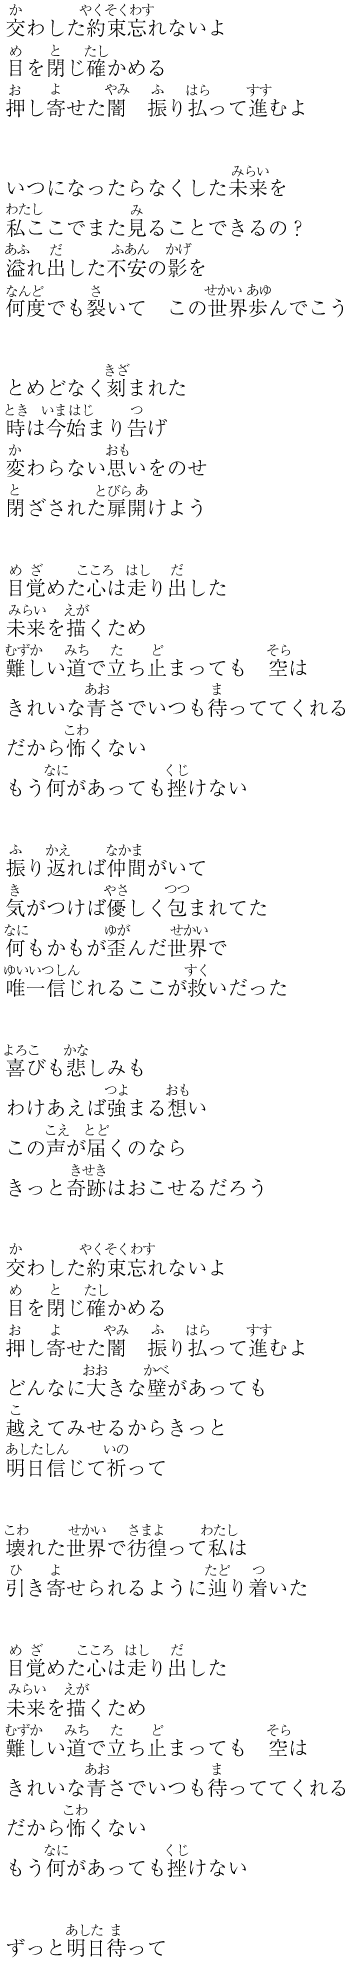 Lyrics in Japanese characters